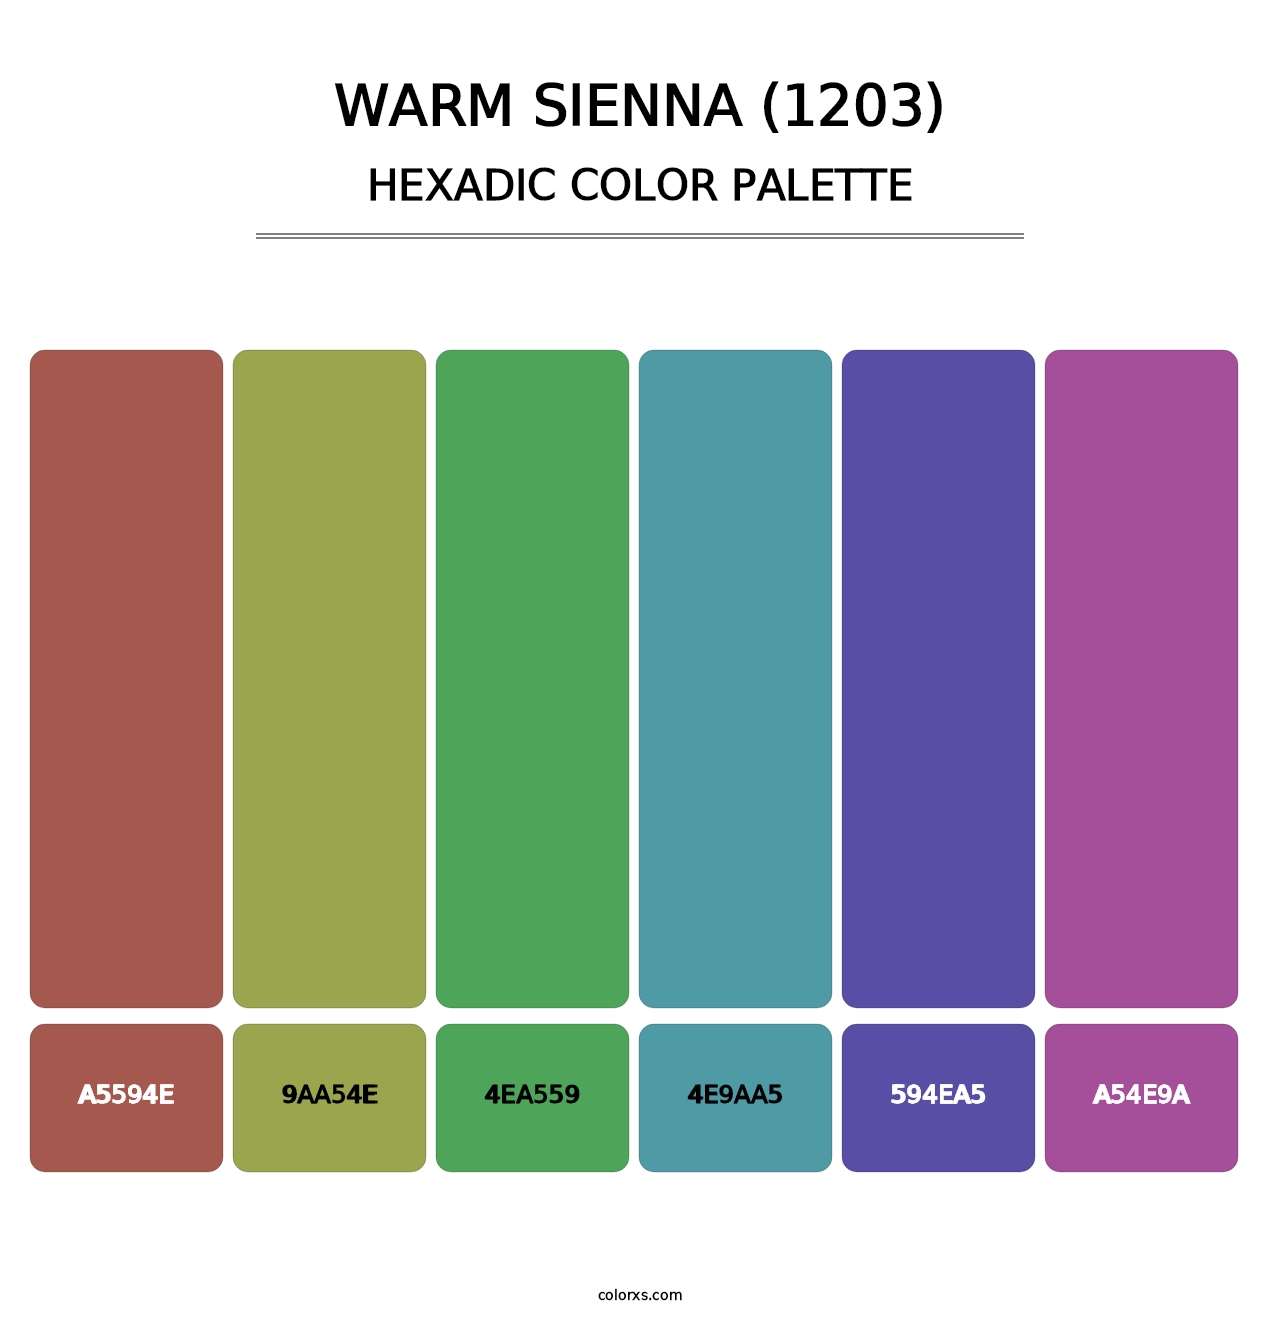 Warm Sienna (1203) - Hexadic Color Palette